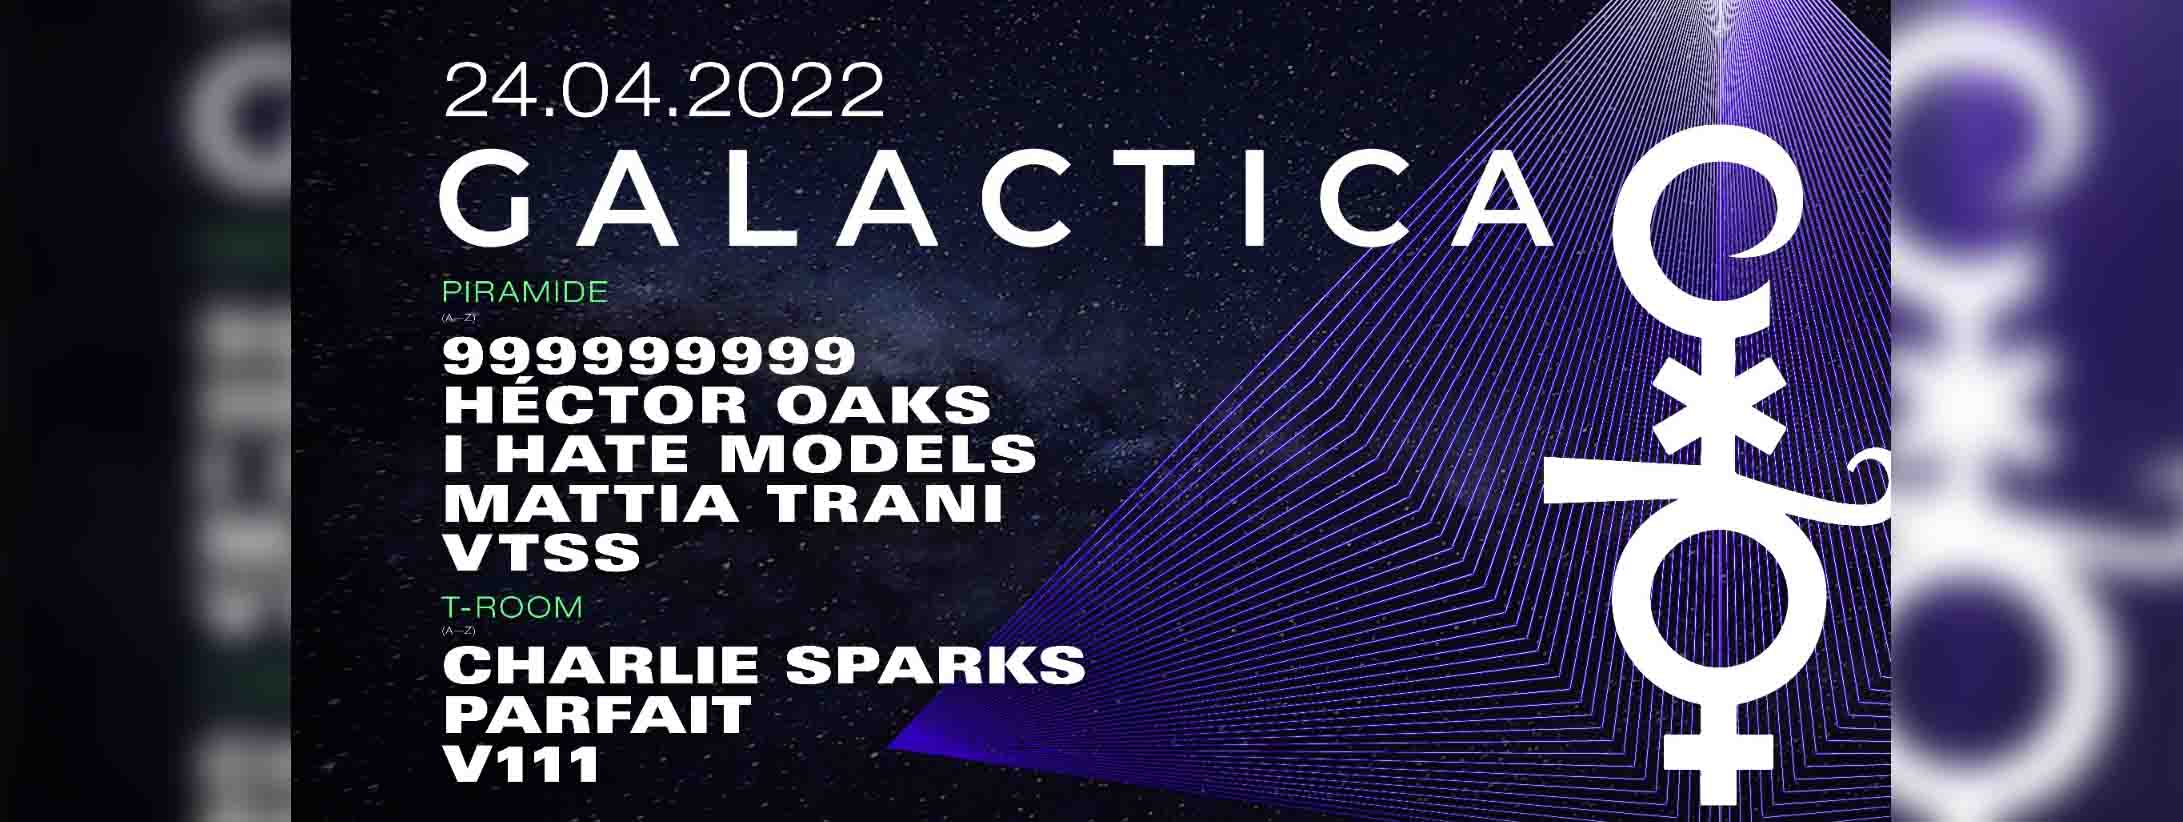 Galactica-cocorico-24-04-2022